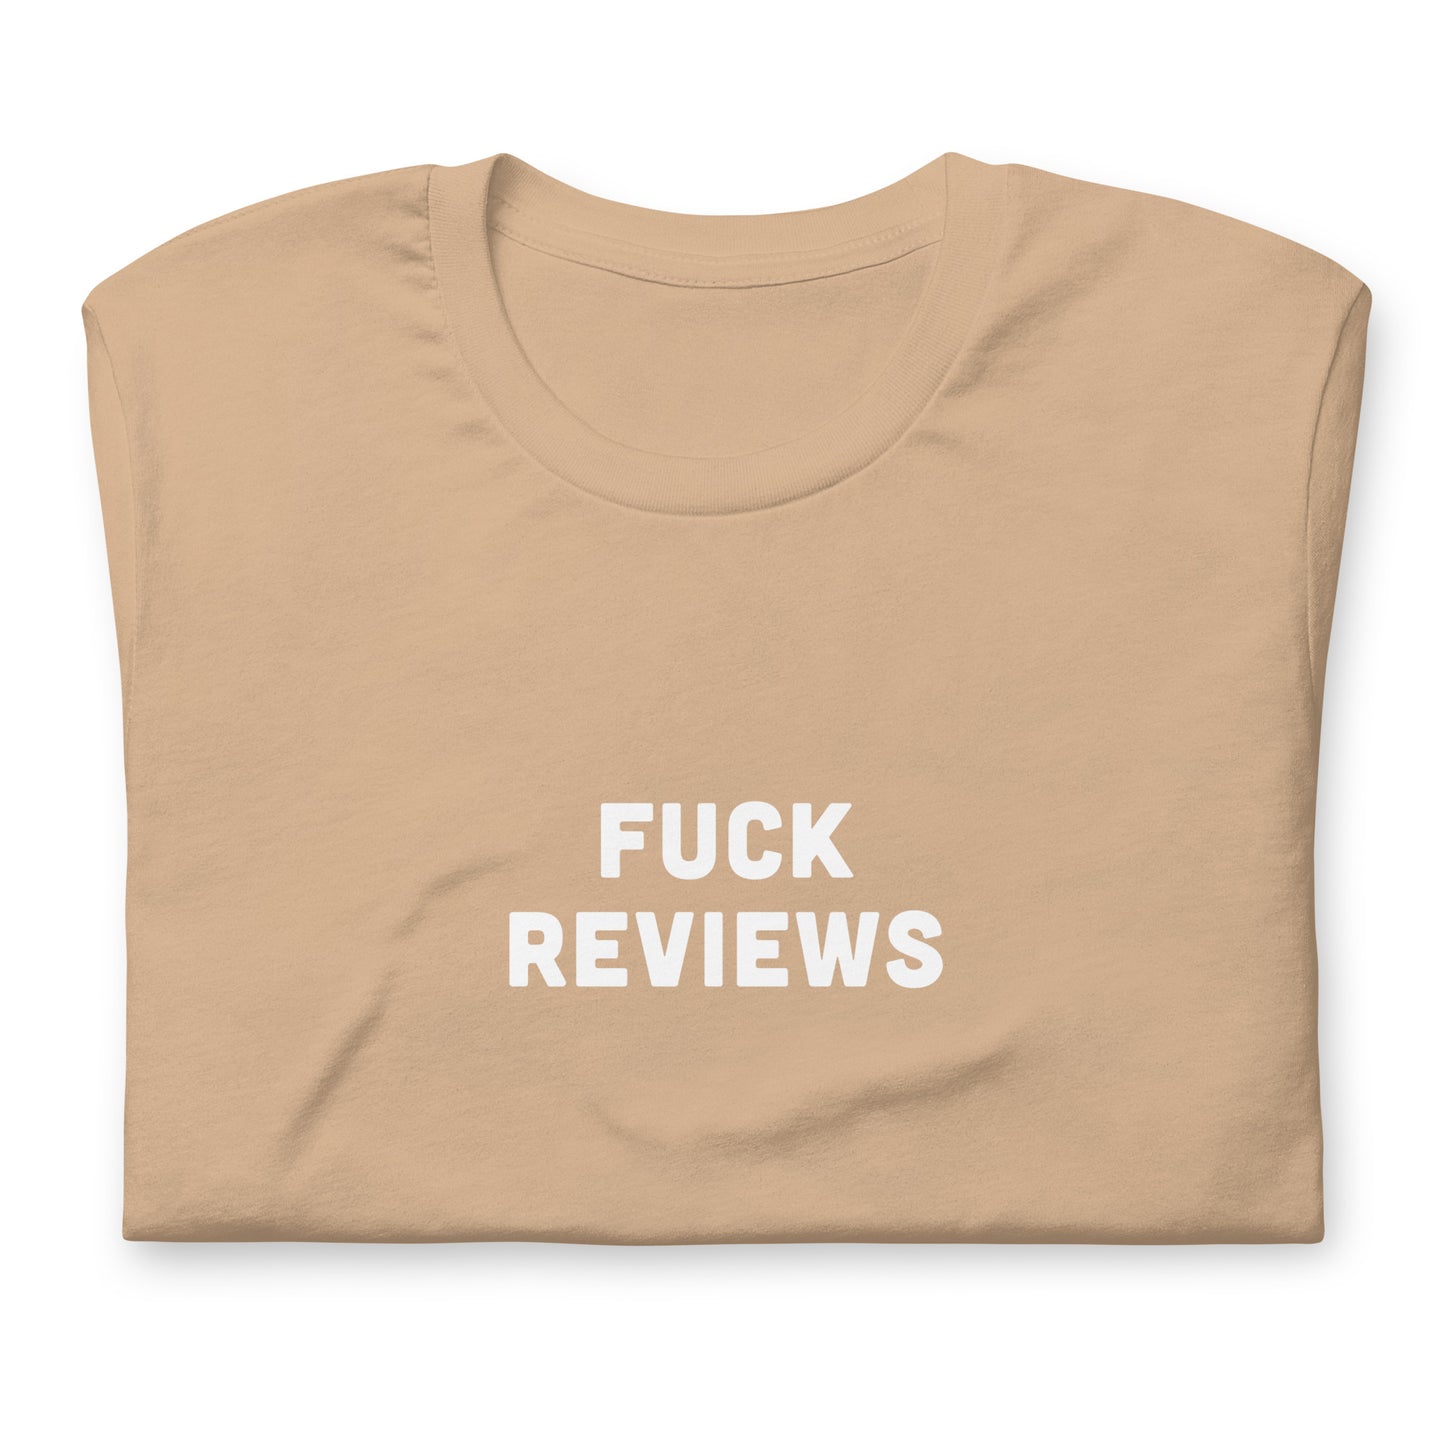 Fuck Reviews T-Shirt Size 2XL Color Forest